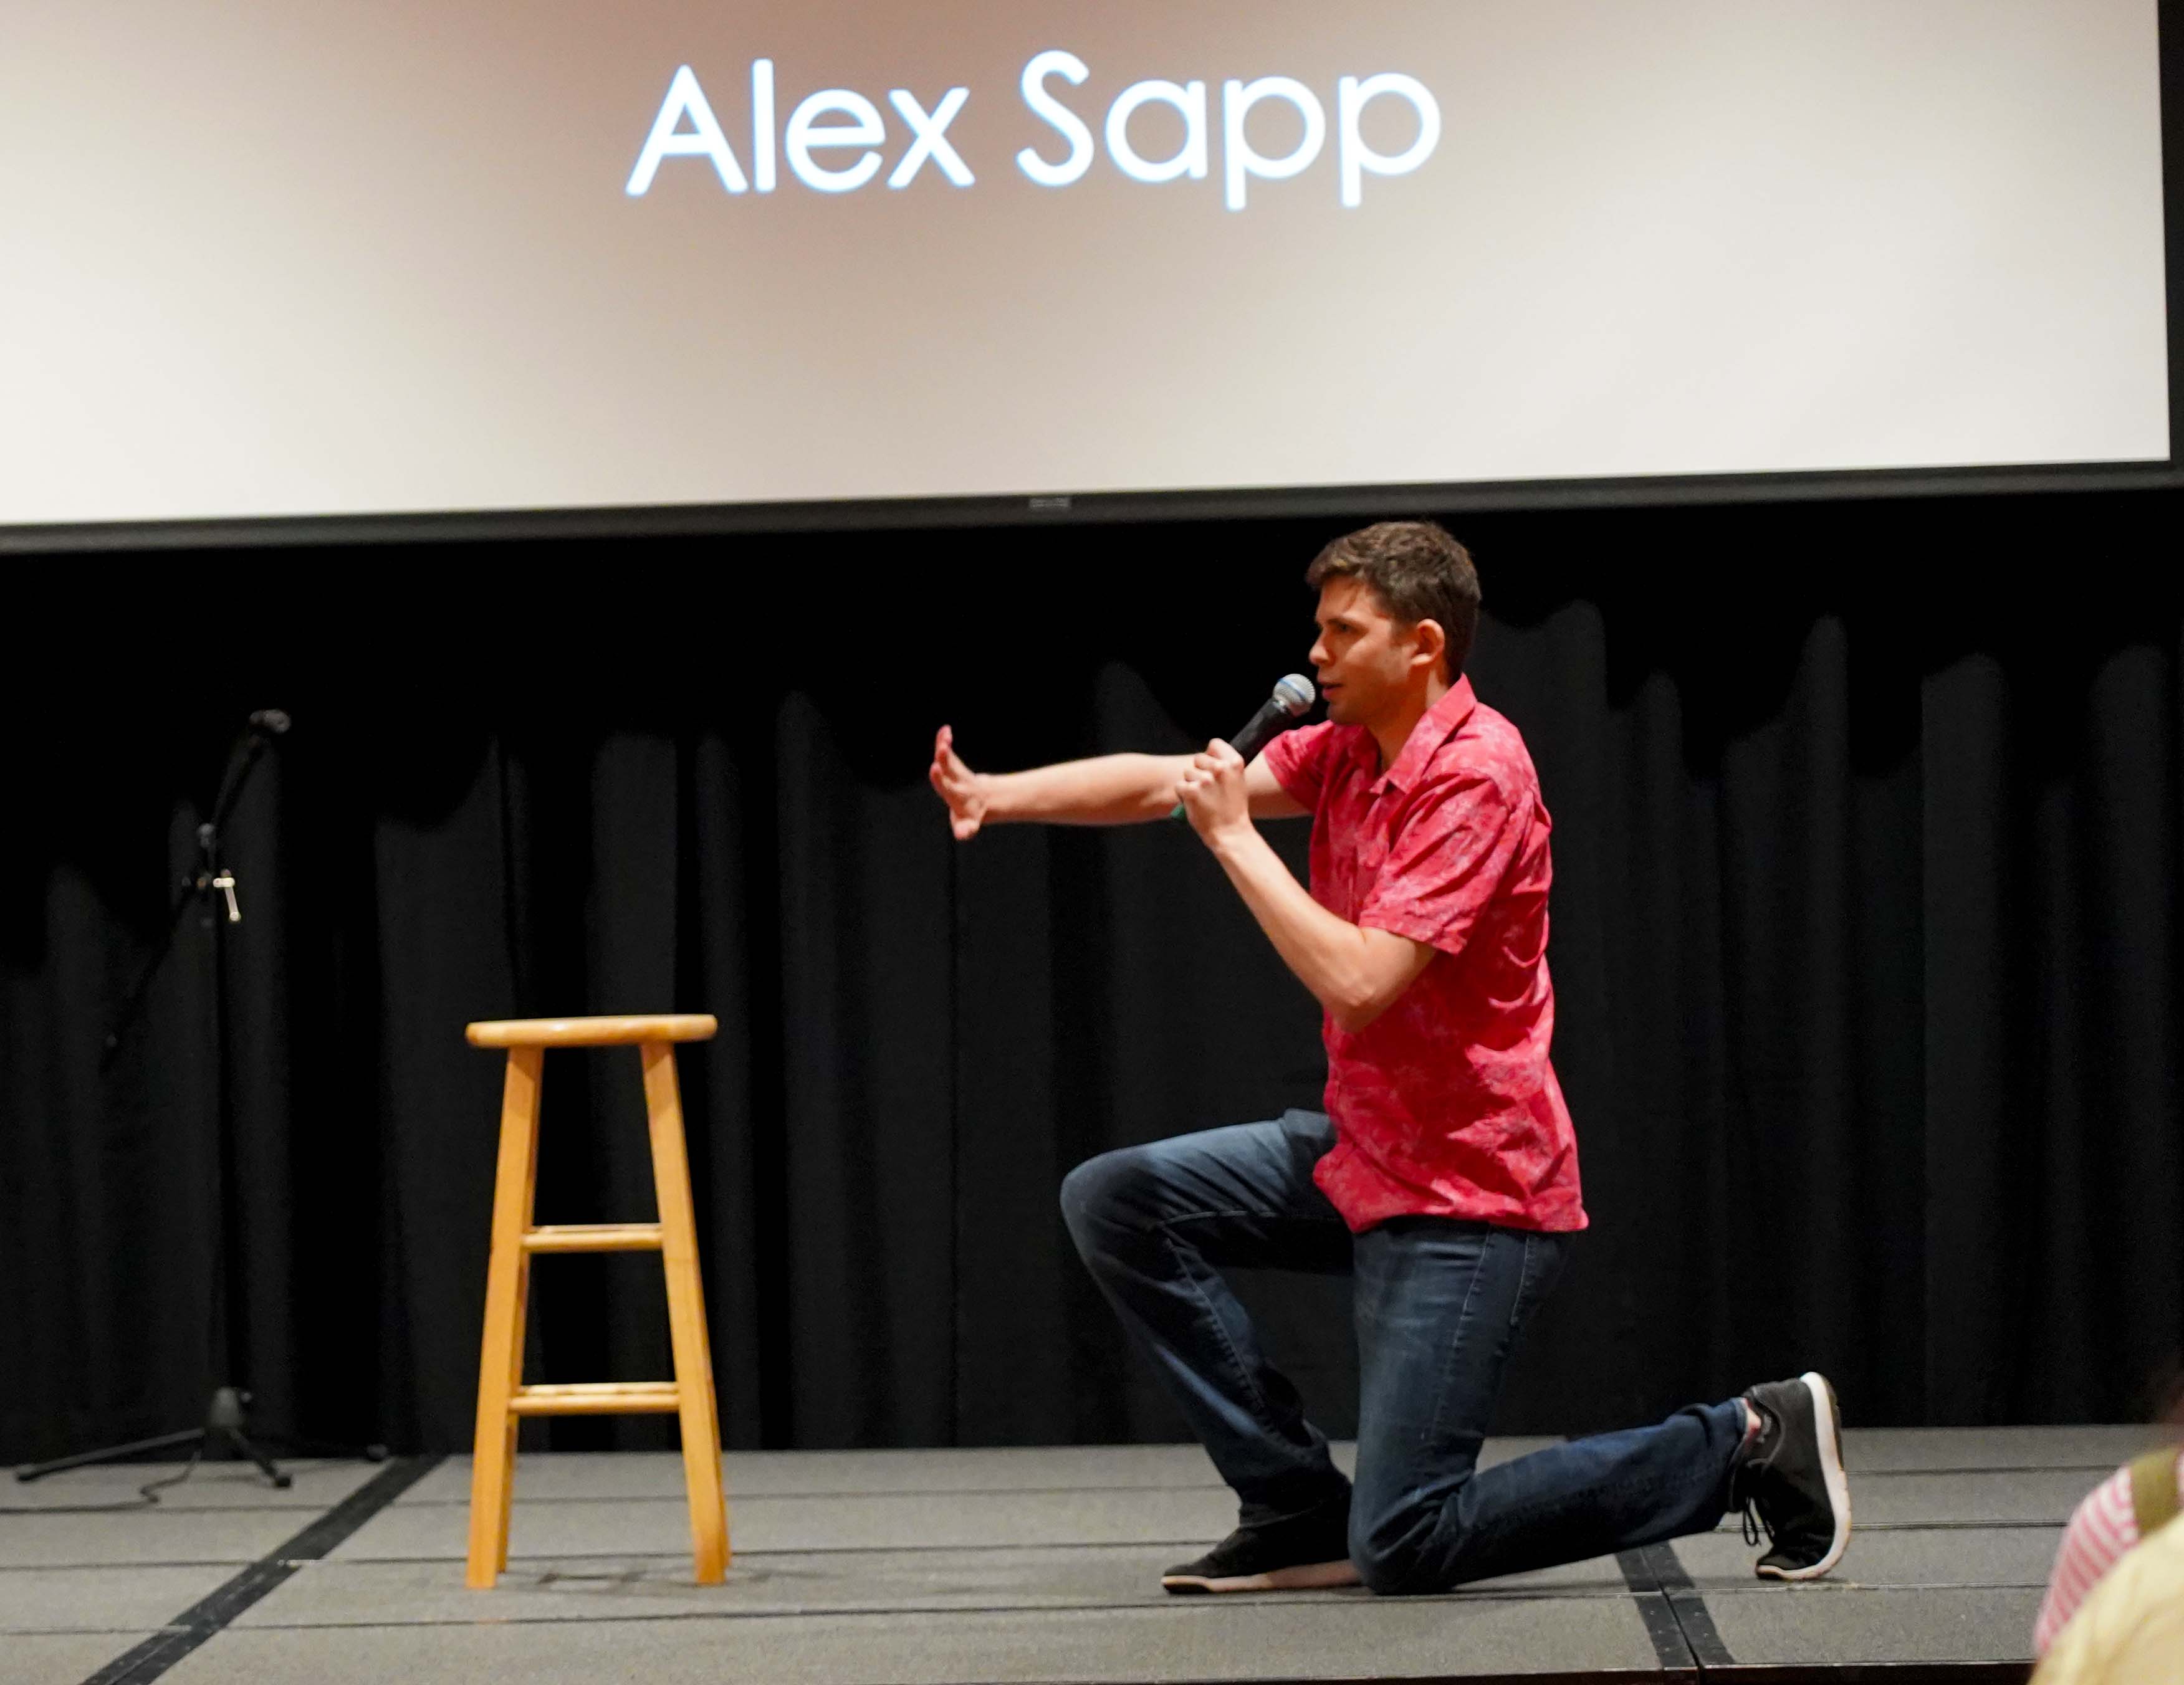 Alex Sapp performing comedy